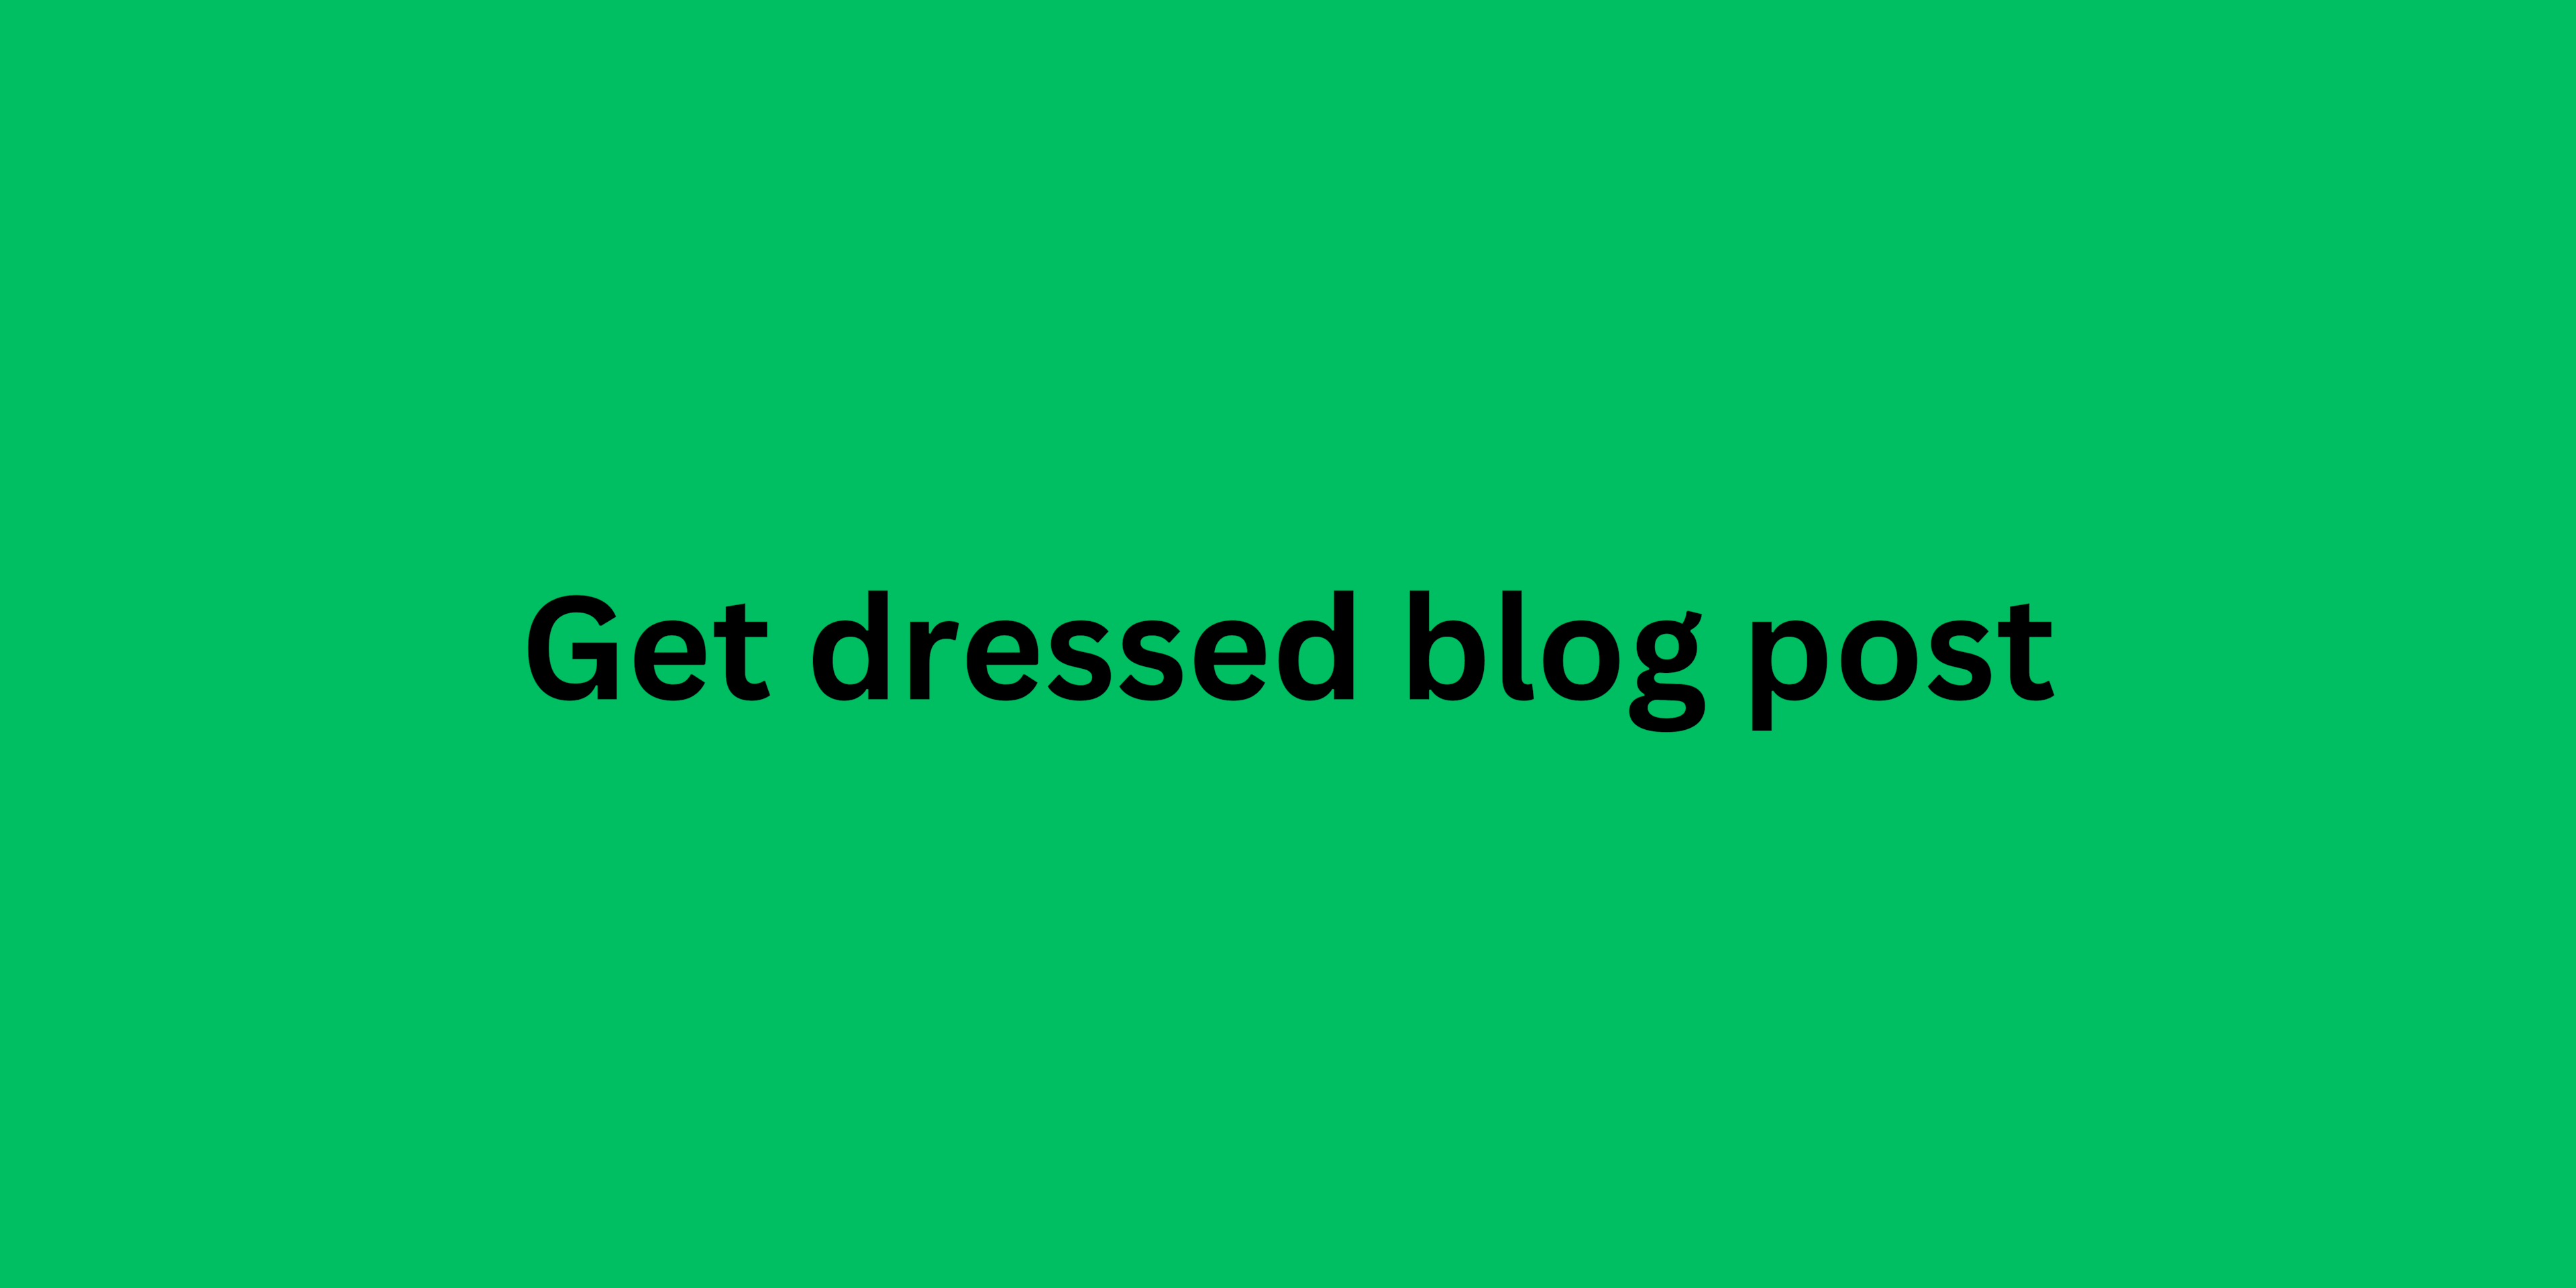 Get dressed blog post